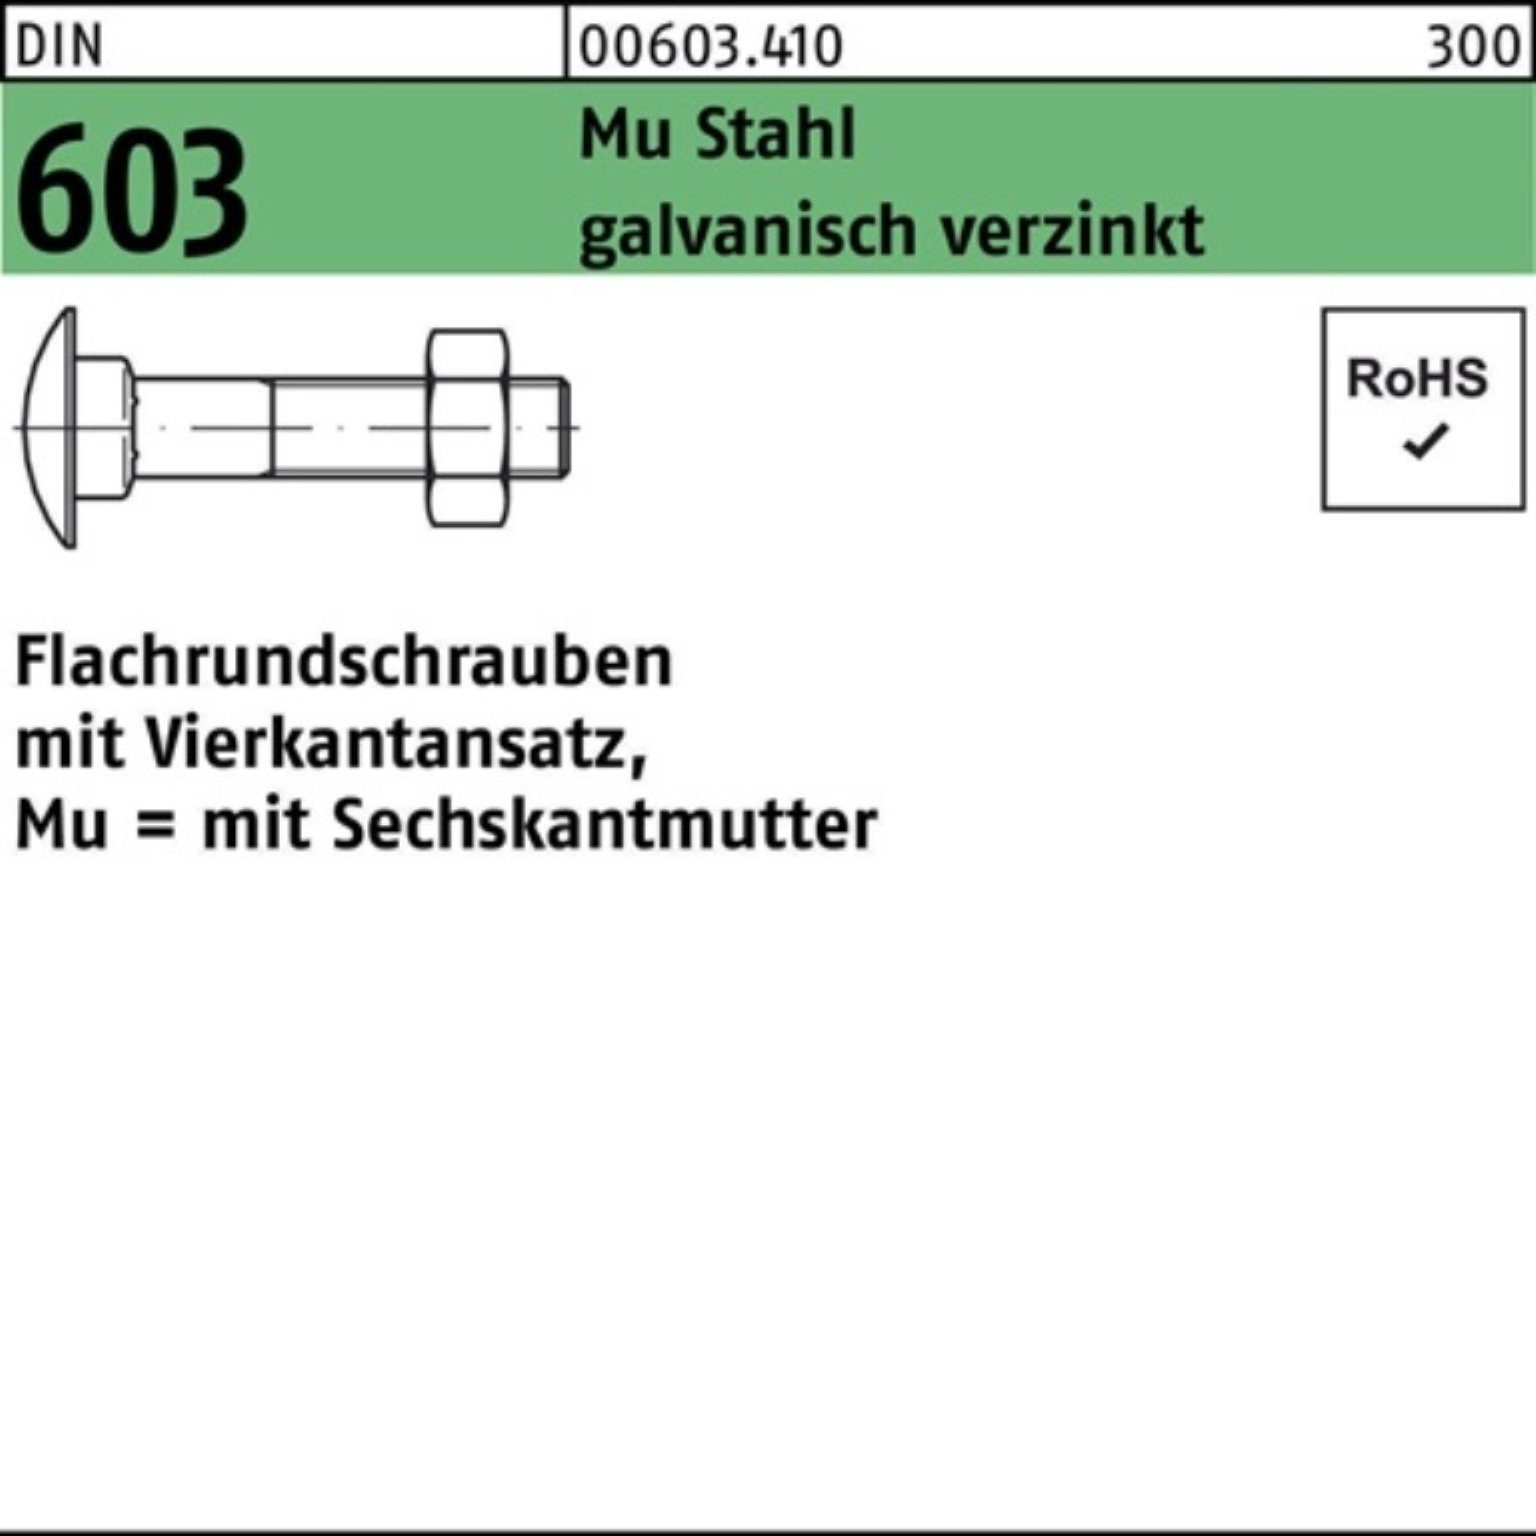 Reyher Schraube 100er Pack Vierkantansatz/6-ktmutter Flachrundschraube 603 DIN M12x320